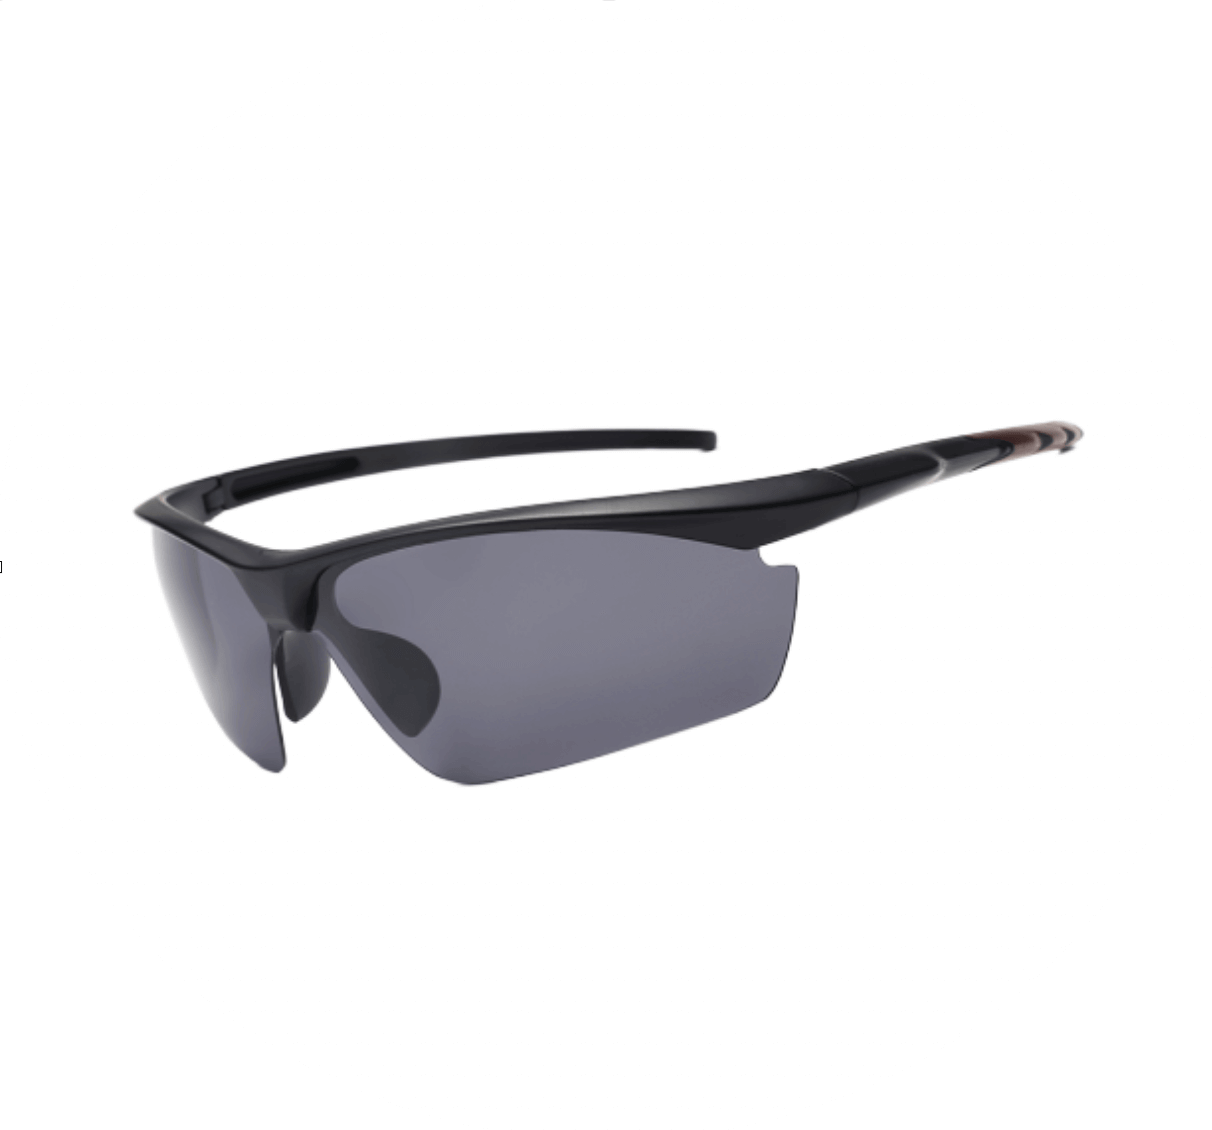 Sports Sunglasses Manufacturers - Sunglasses Supplier China_Running Sunglasses